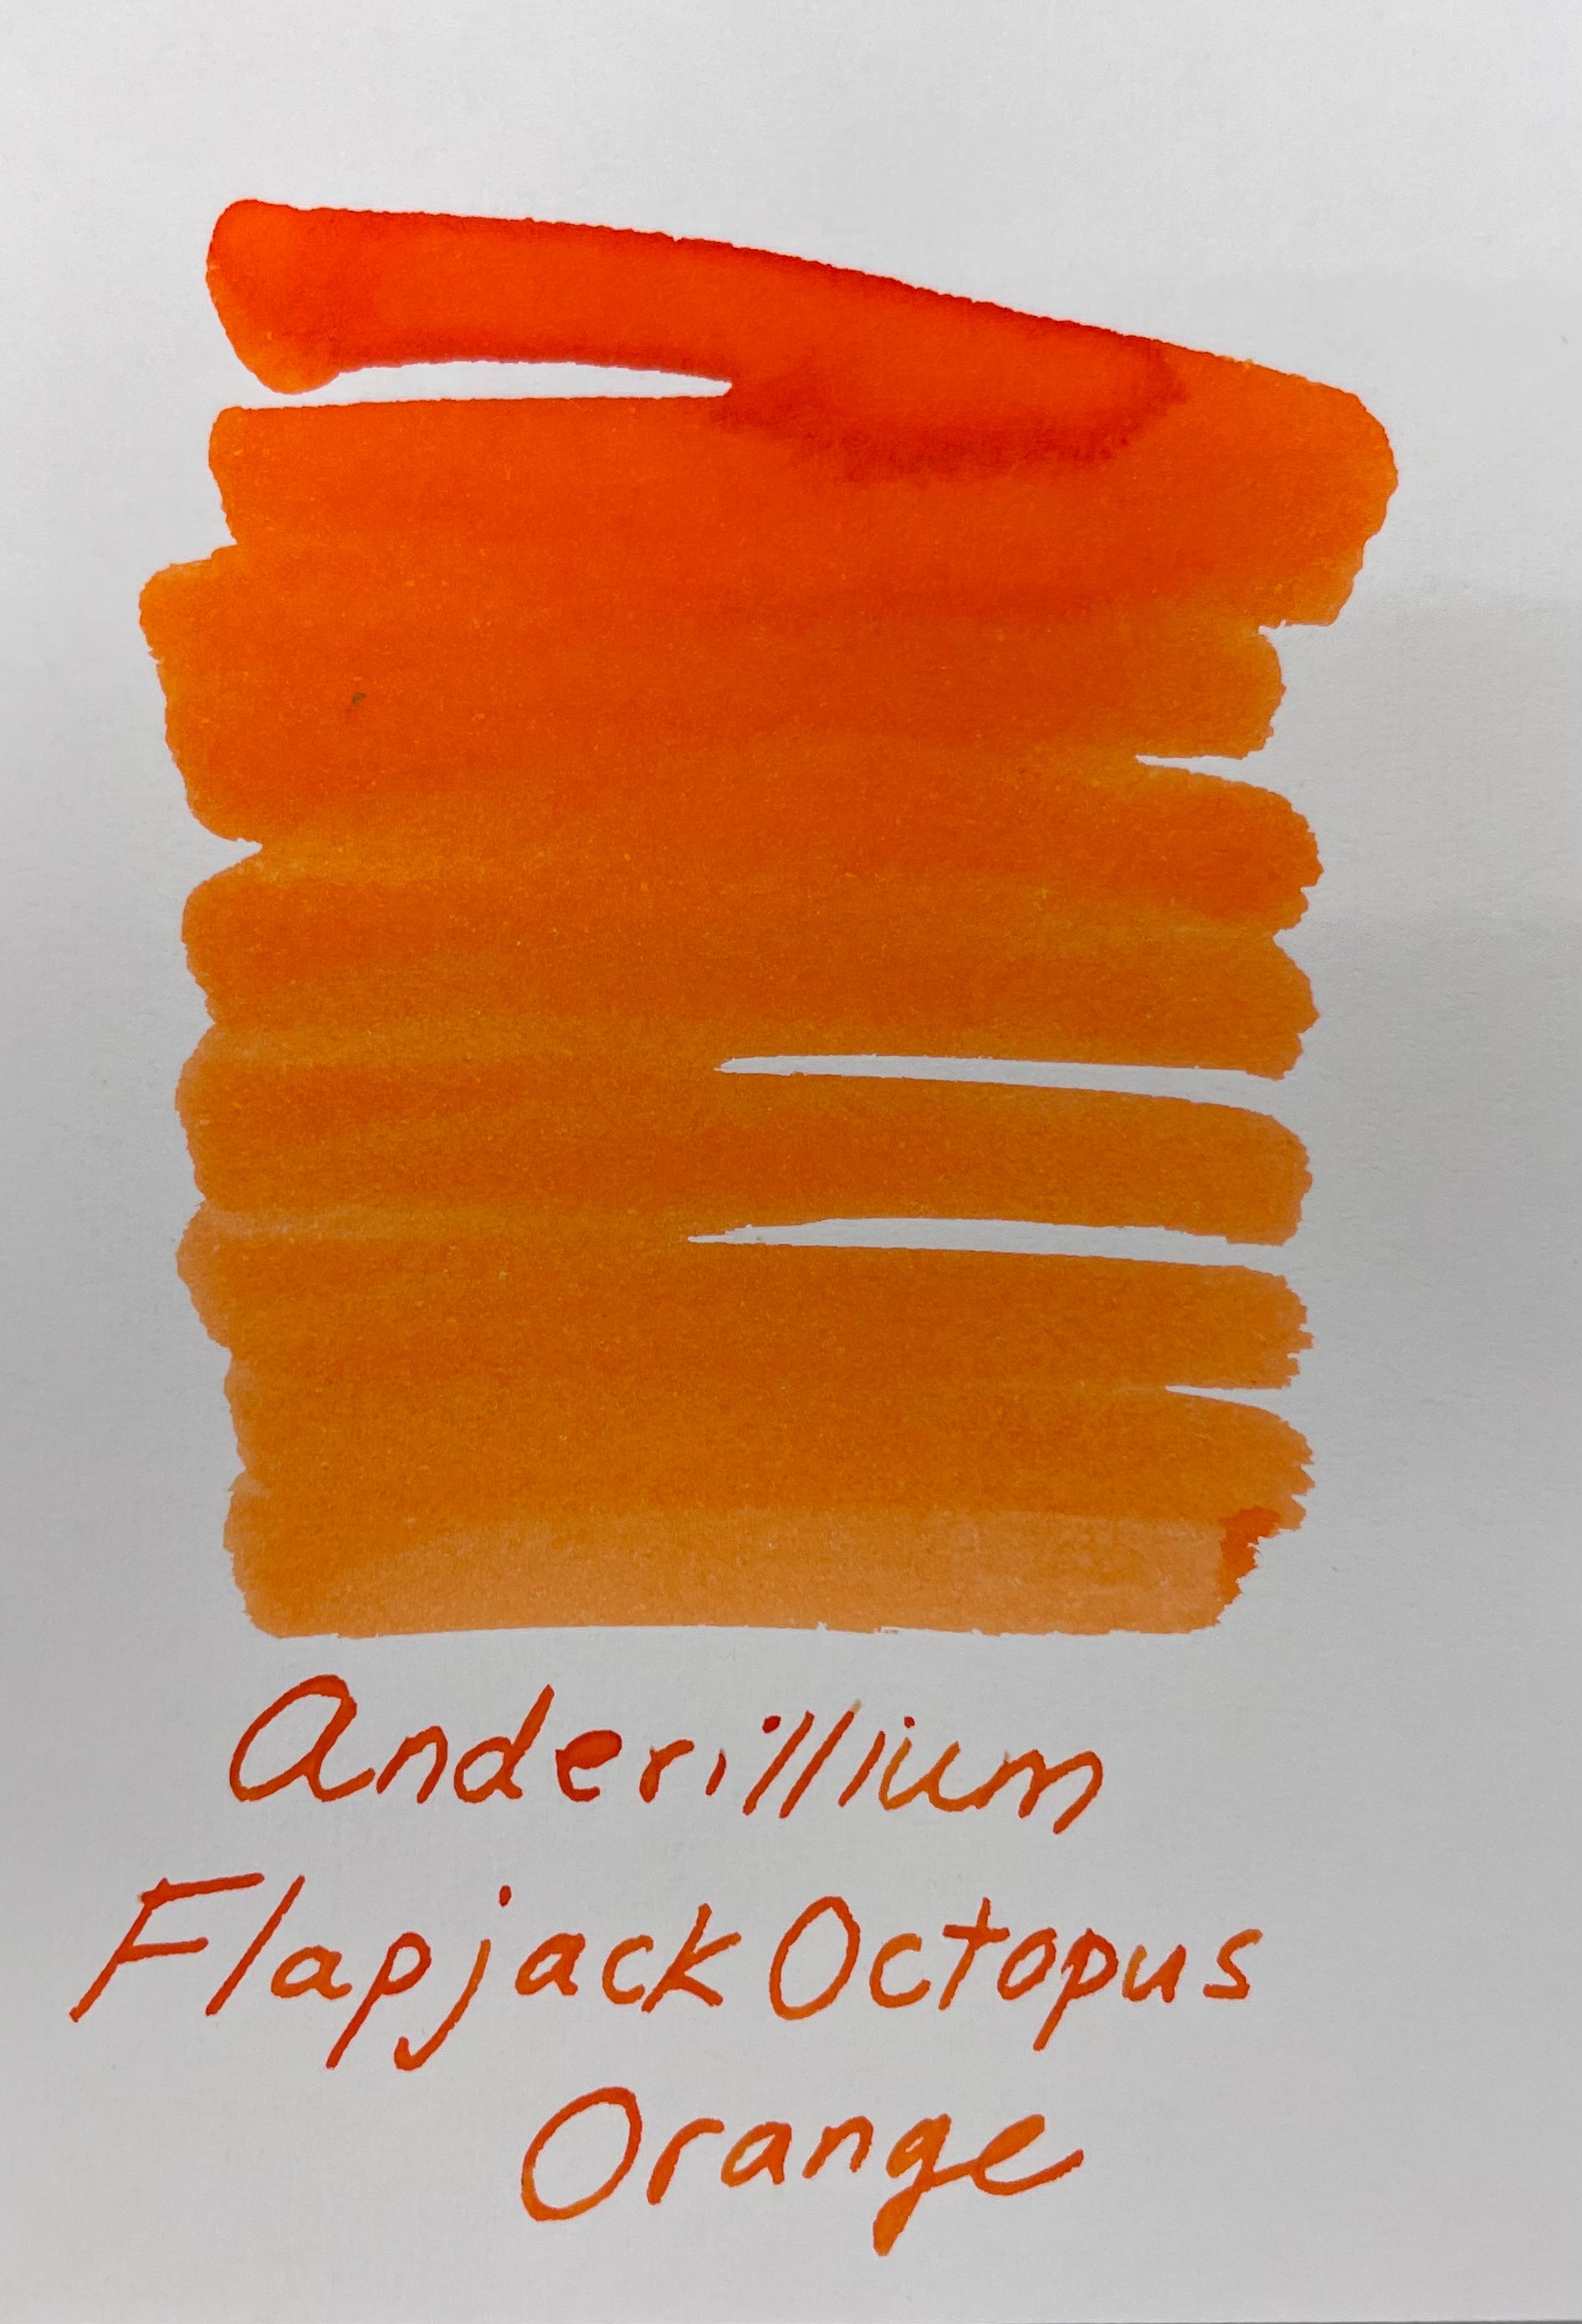 Anderillium Cephalopod Ink - Flapjack Octopus Orange - 1.5 oz-Pen Boutique Ltd